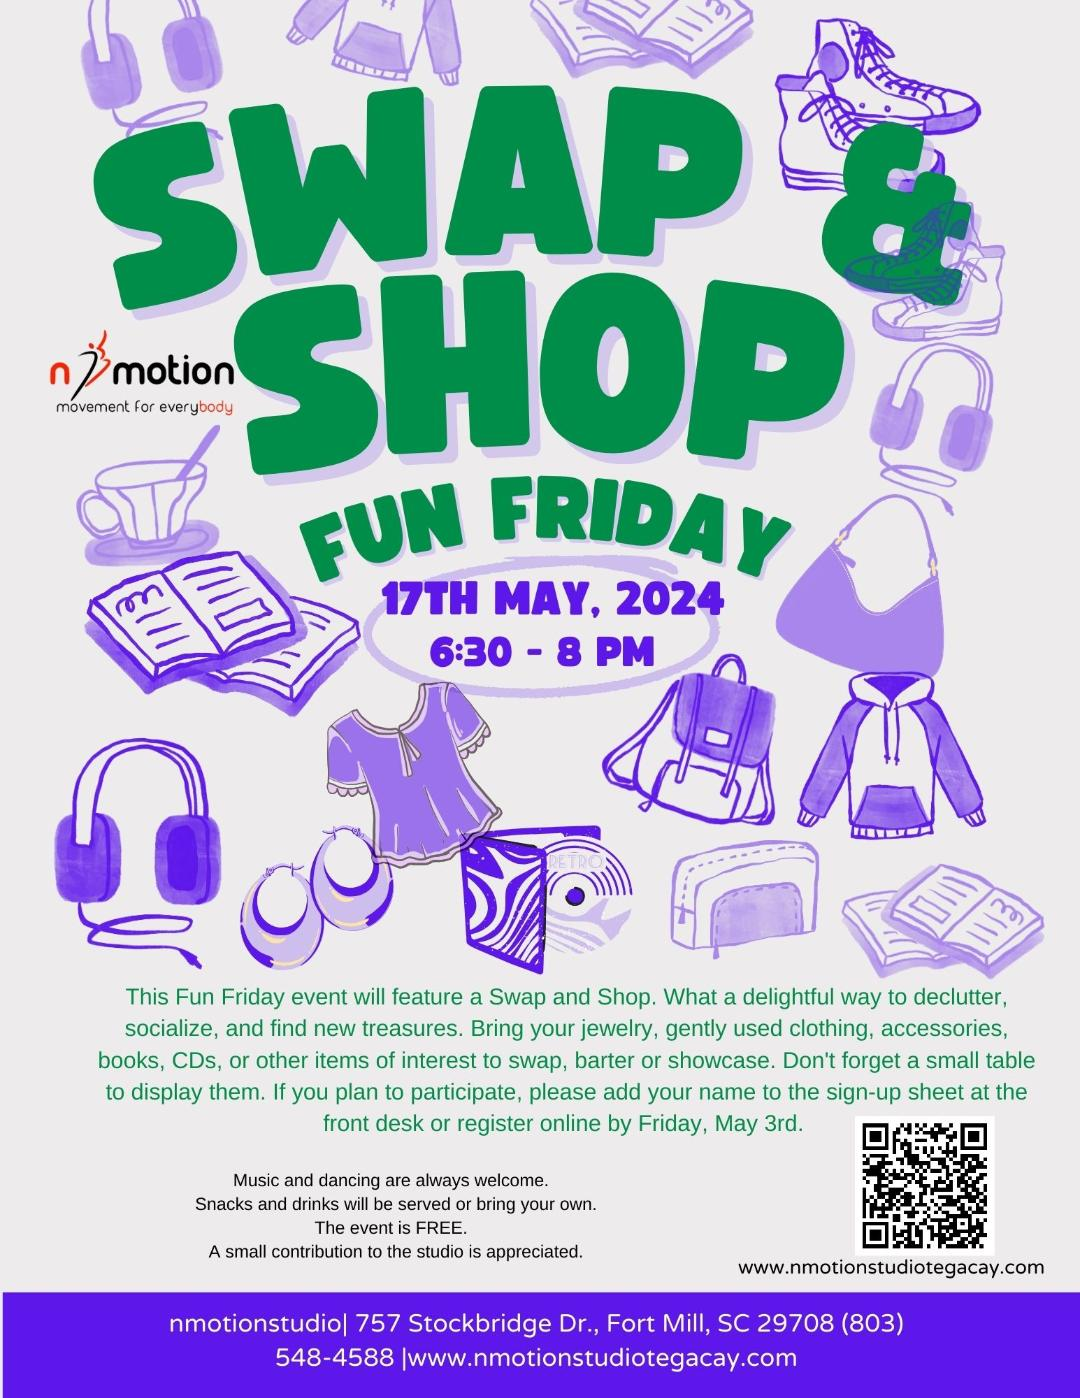 Swap Shop Fun Friday